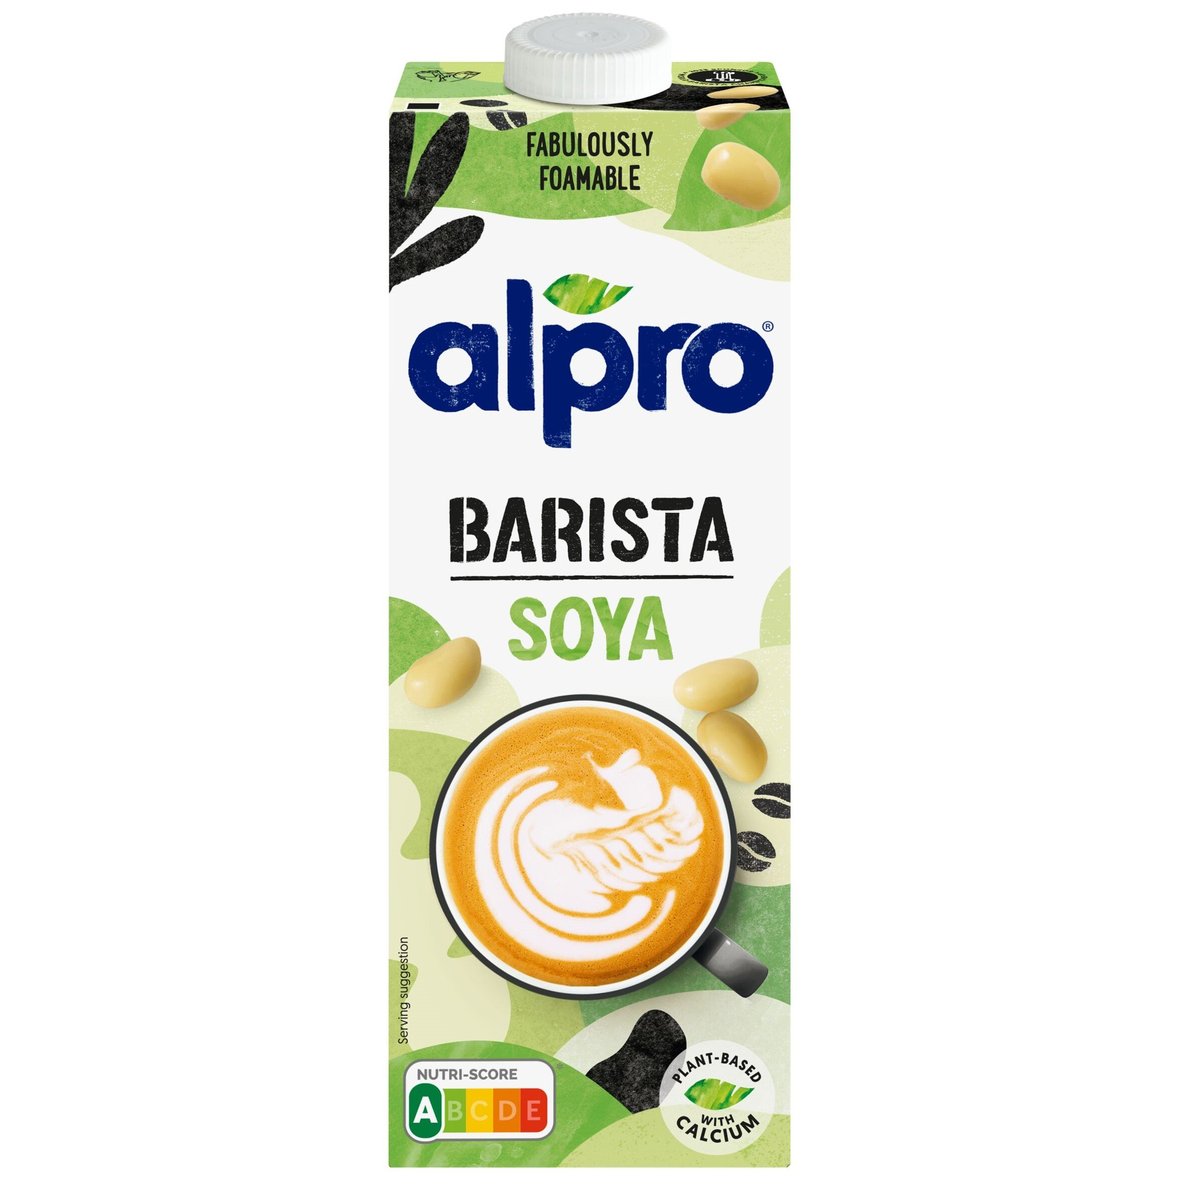 Alpro Barista sójový nápoj